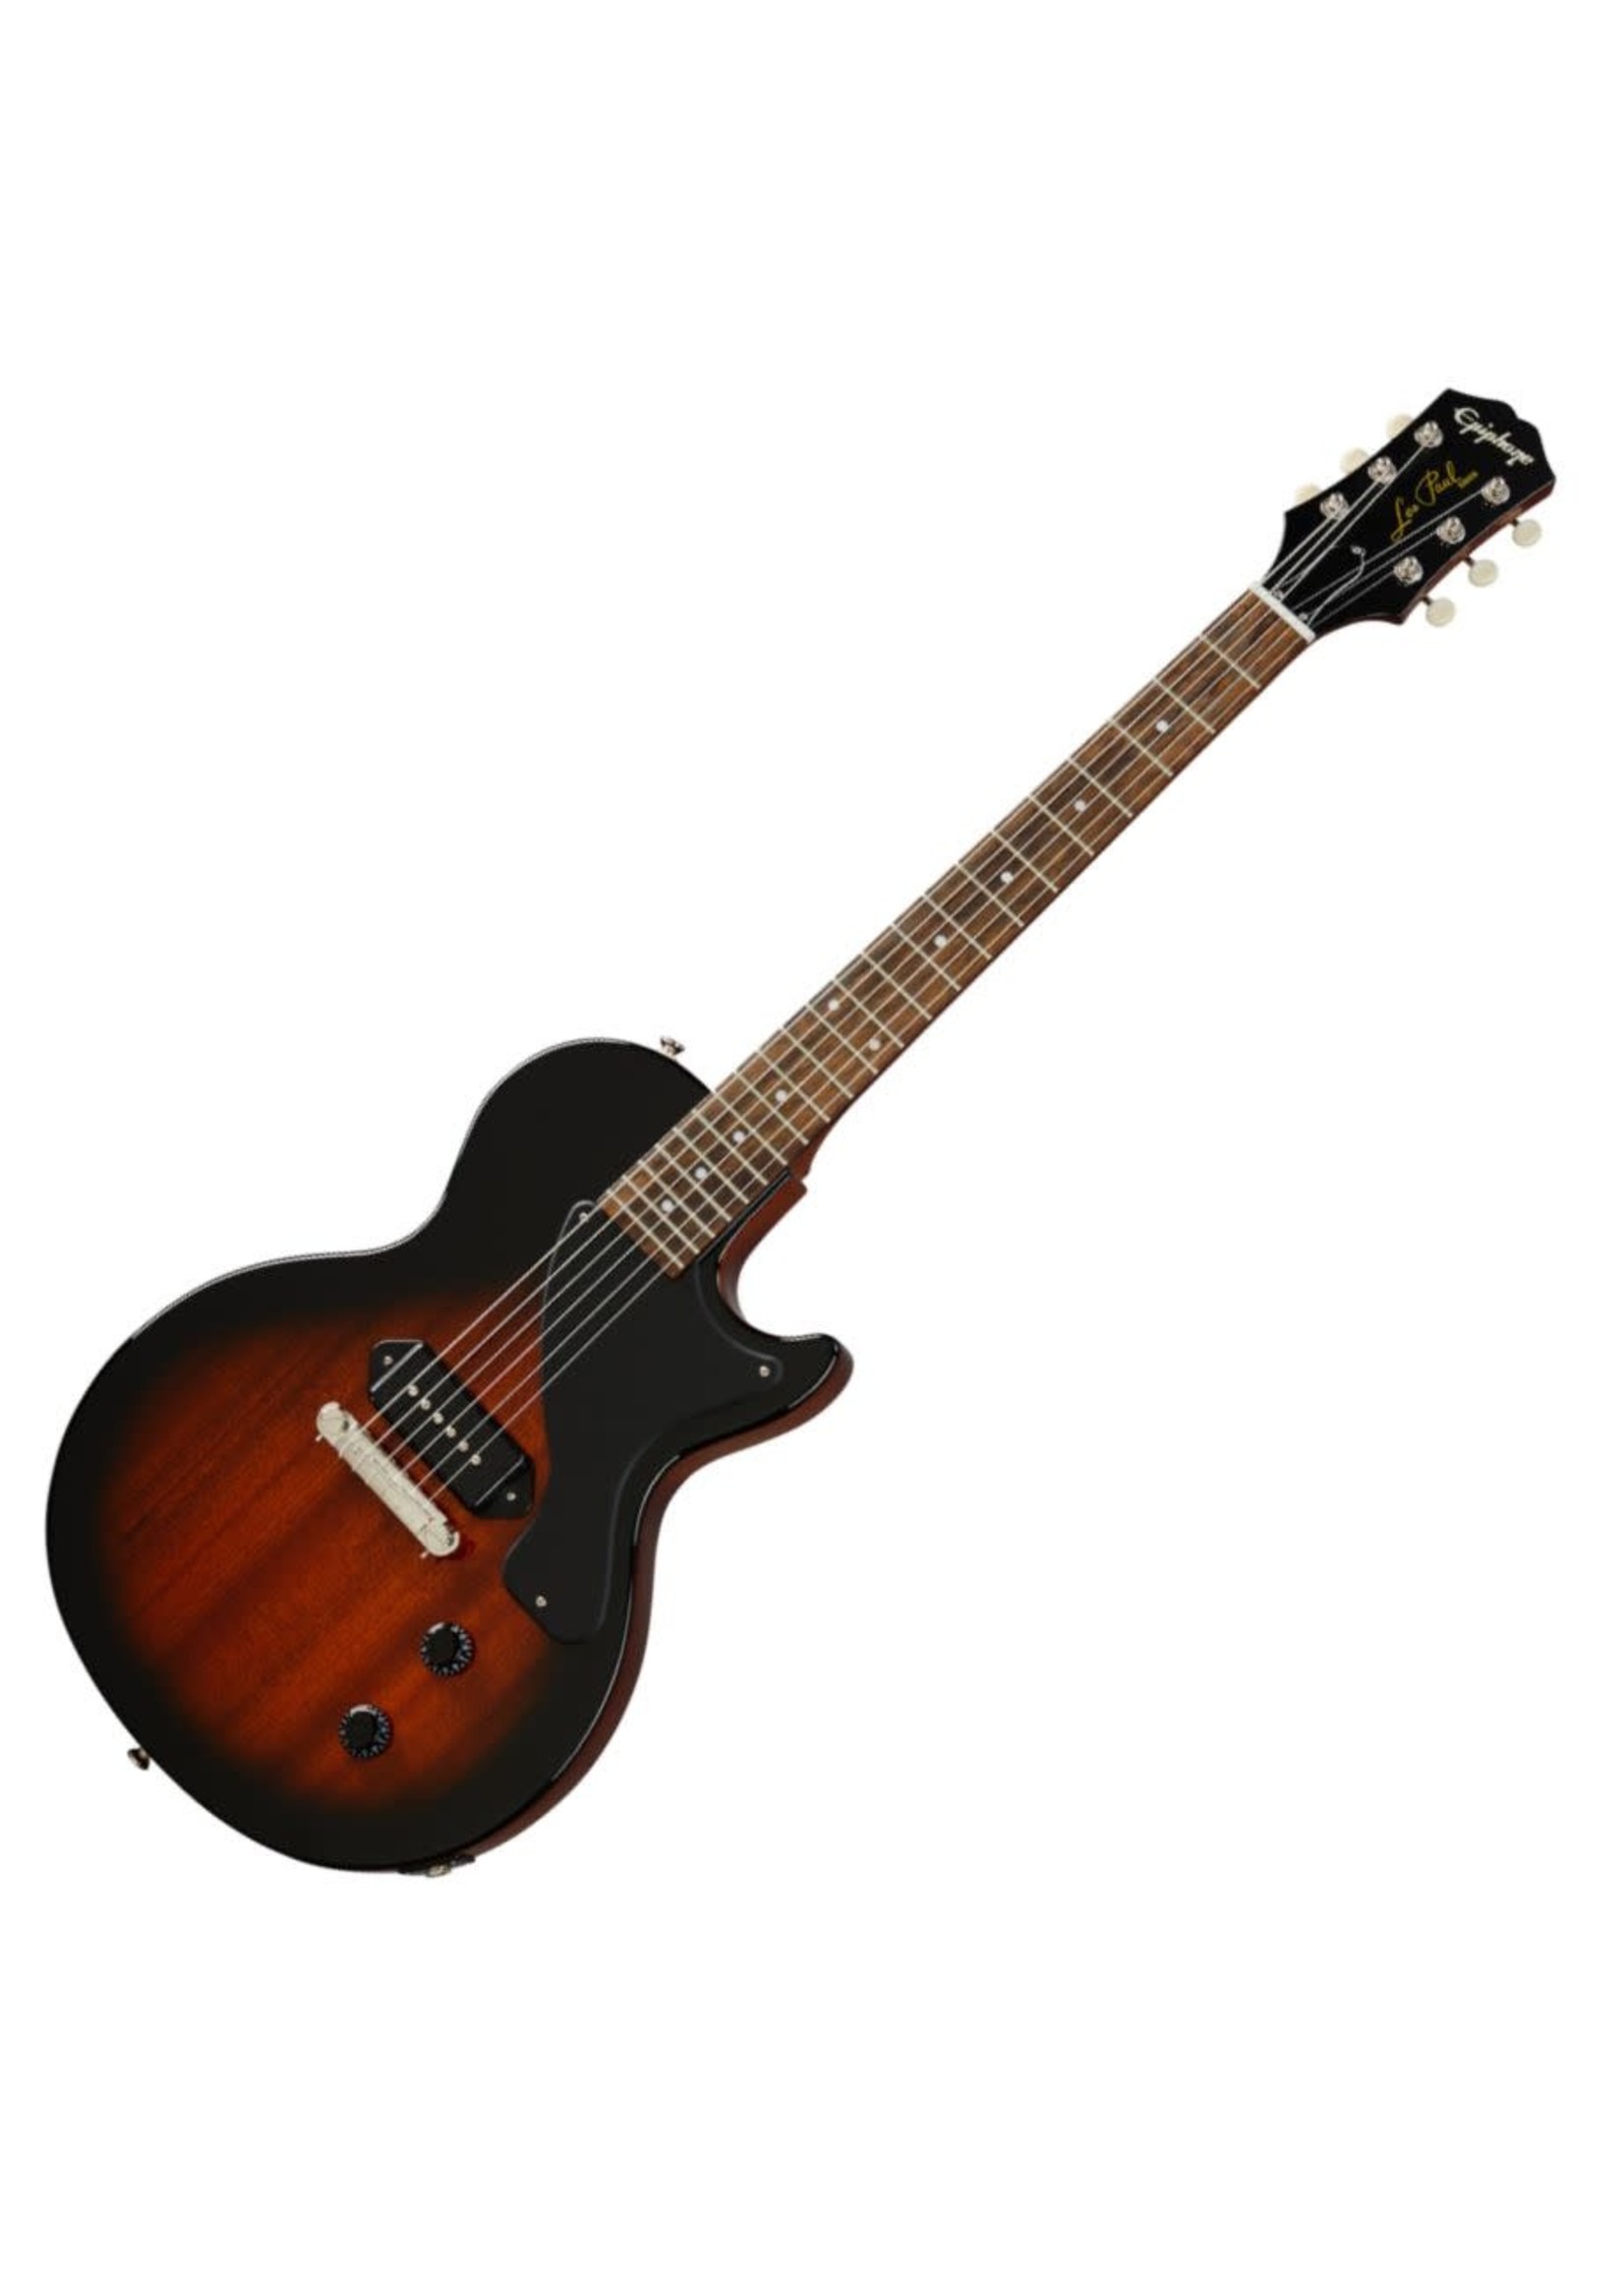 Epiphone Epiphone EILJVSNH Les Paul Junior 6-String RH Electric Guitar-Vintage Burst eilj-vs-nh